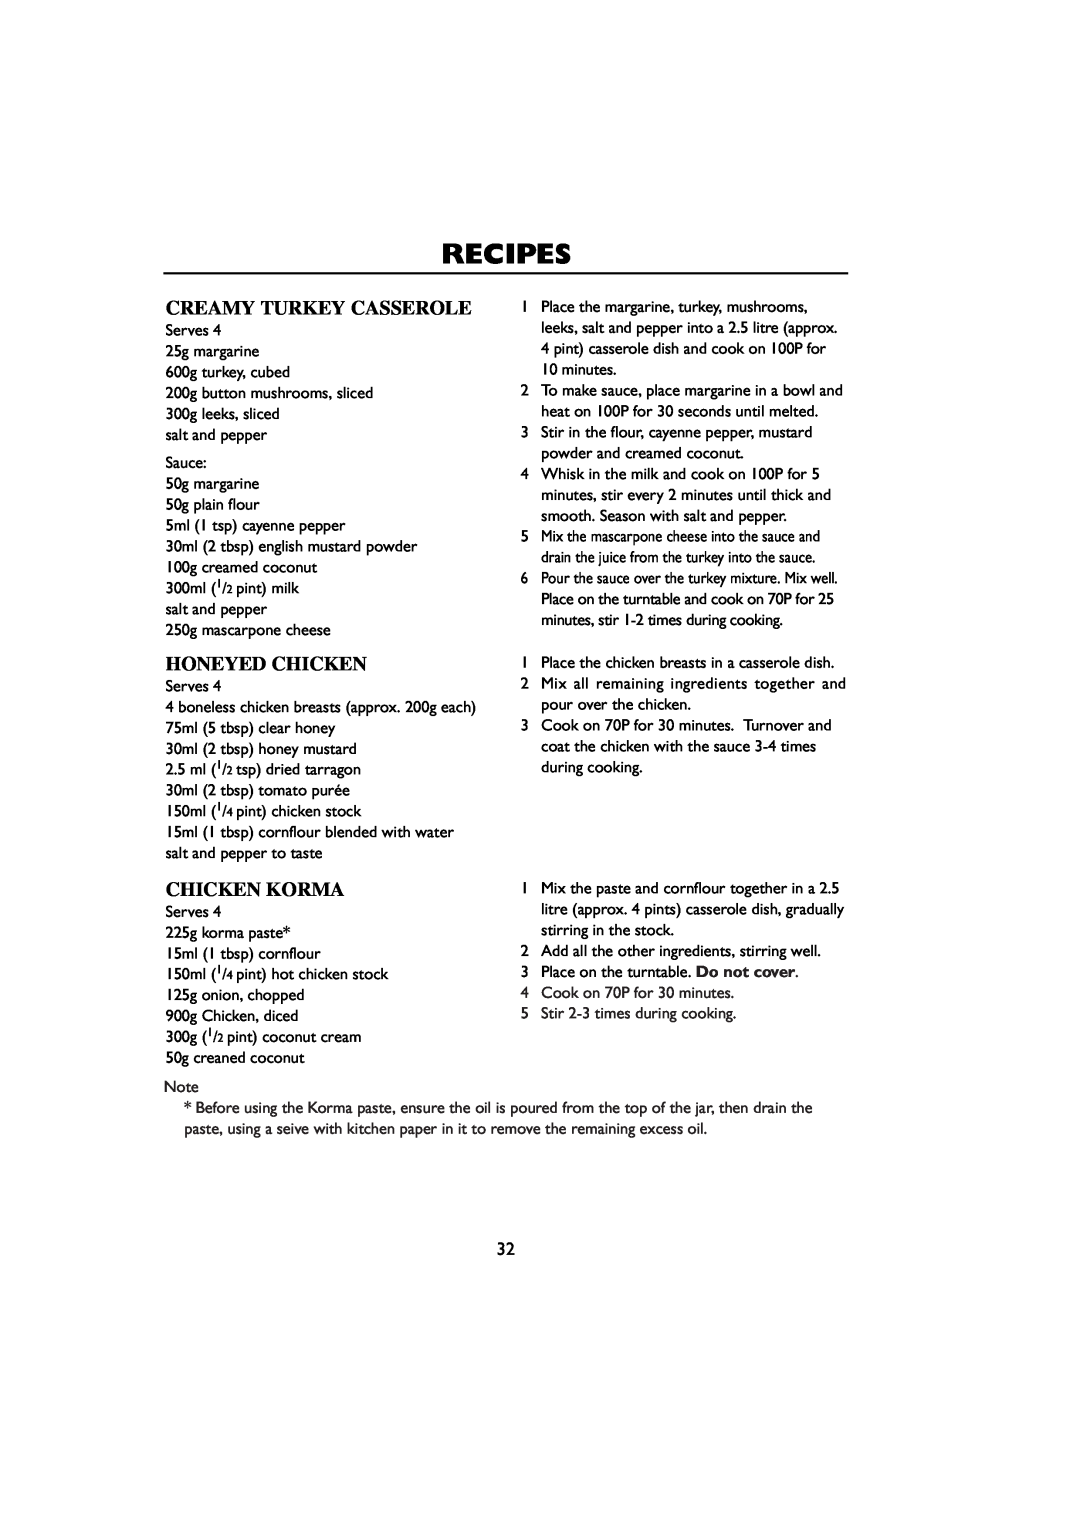 Sharp R-259 operation manual Creamy Turkey Casserole, Honeyed Chicken, Chicken Korma, Recipes 